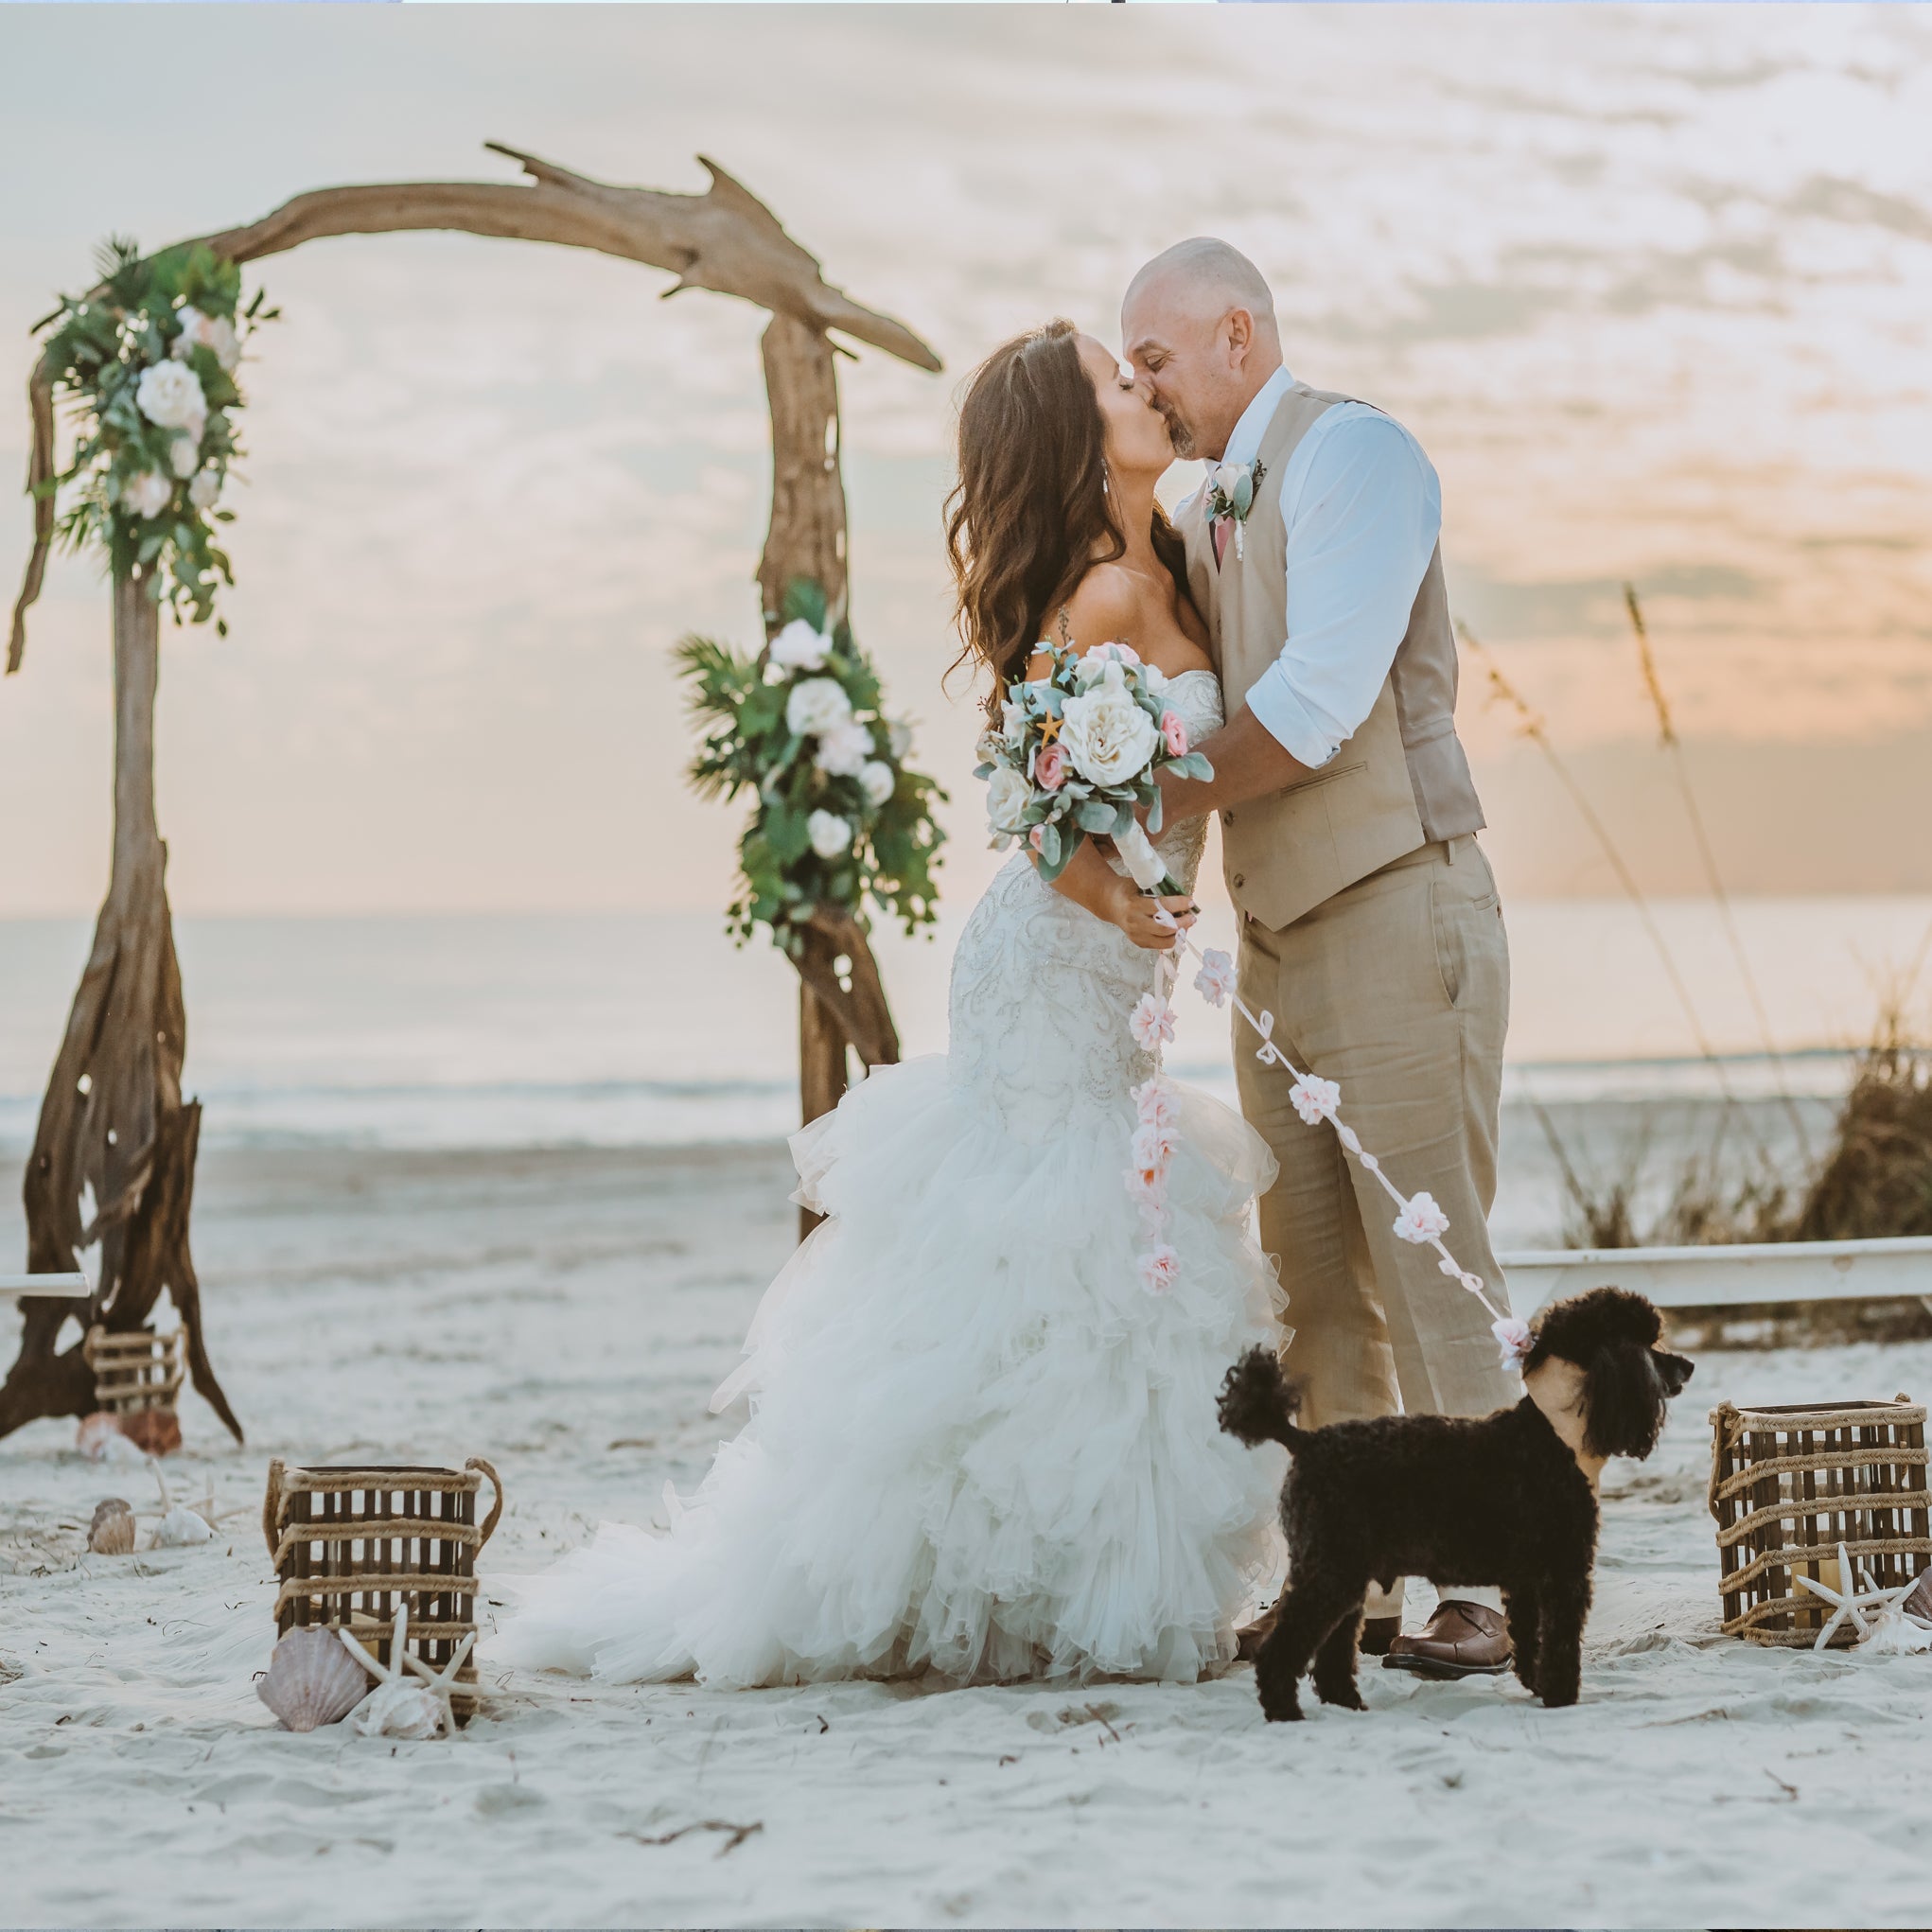 Celebration On The Beach Wedding (All Inclusive) - The Wedding Shop beach wedding reception package all inclusive in panama city beach florida